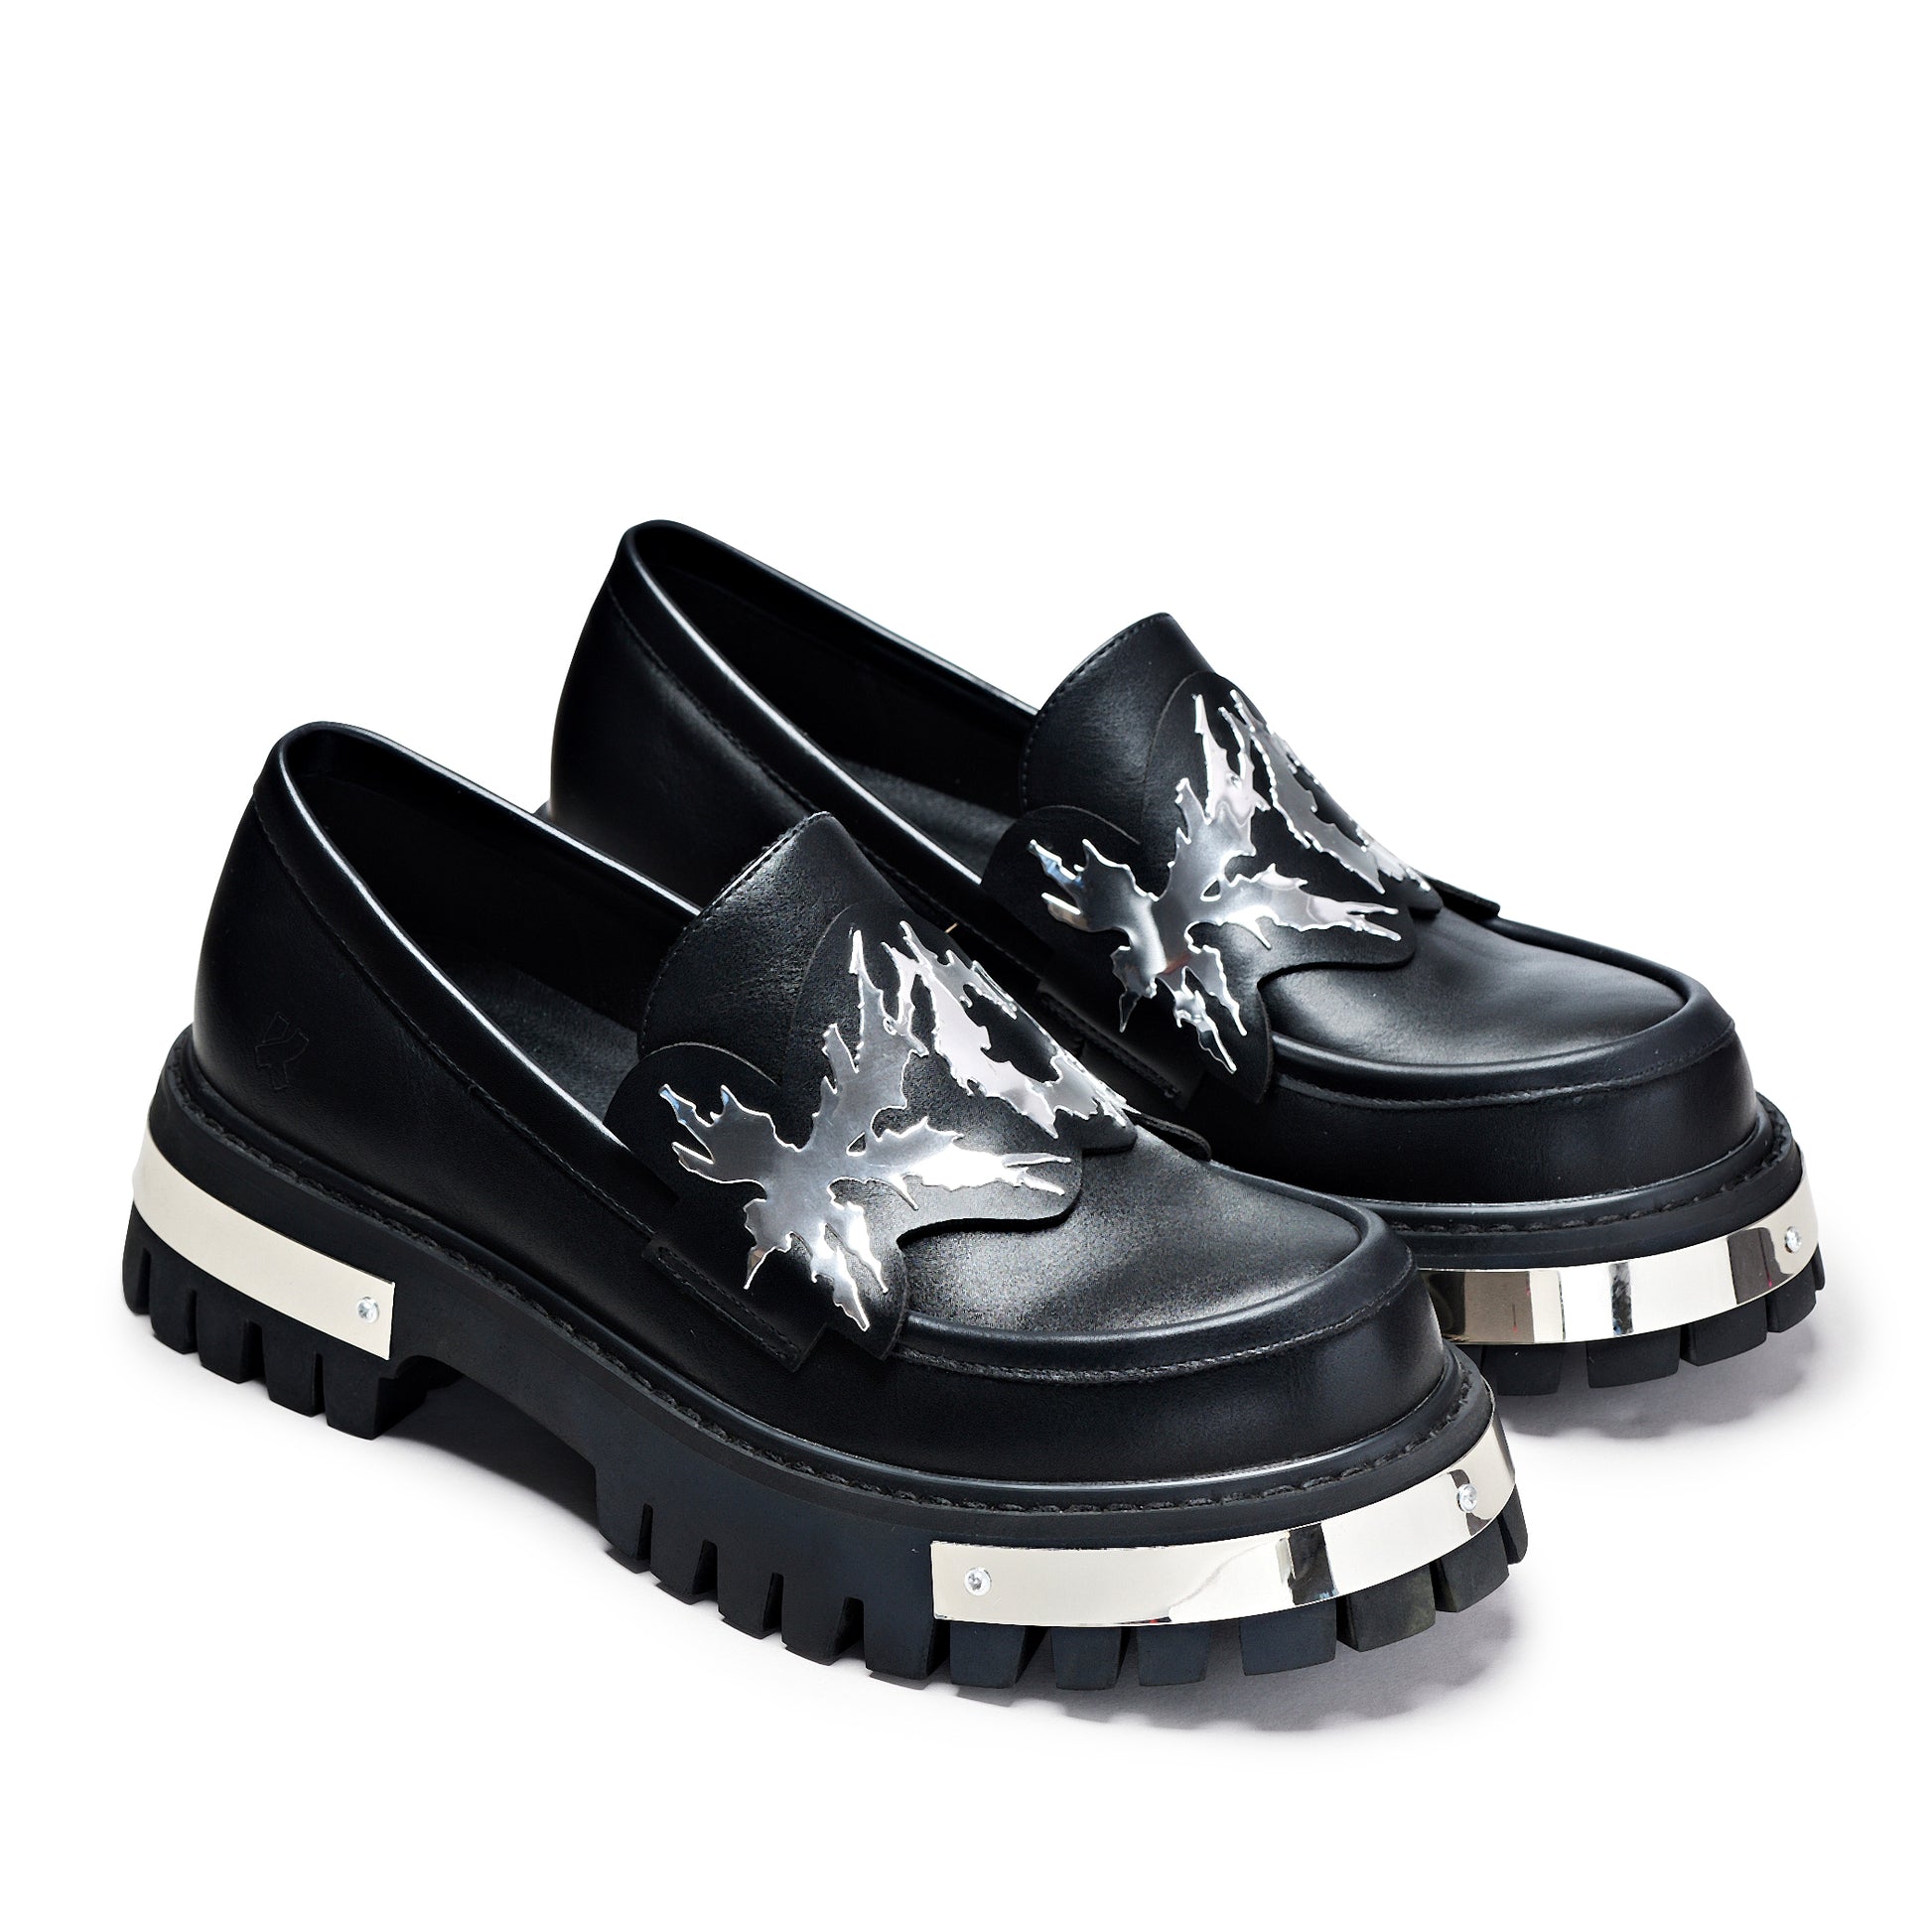 My Men's Metal Loafers - Black - Shoes - KOI Footwear - Black - Three-Quarter View